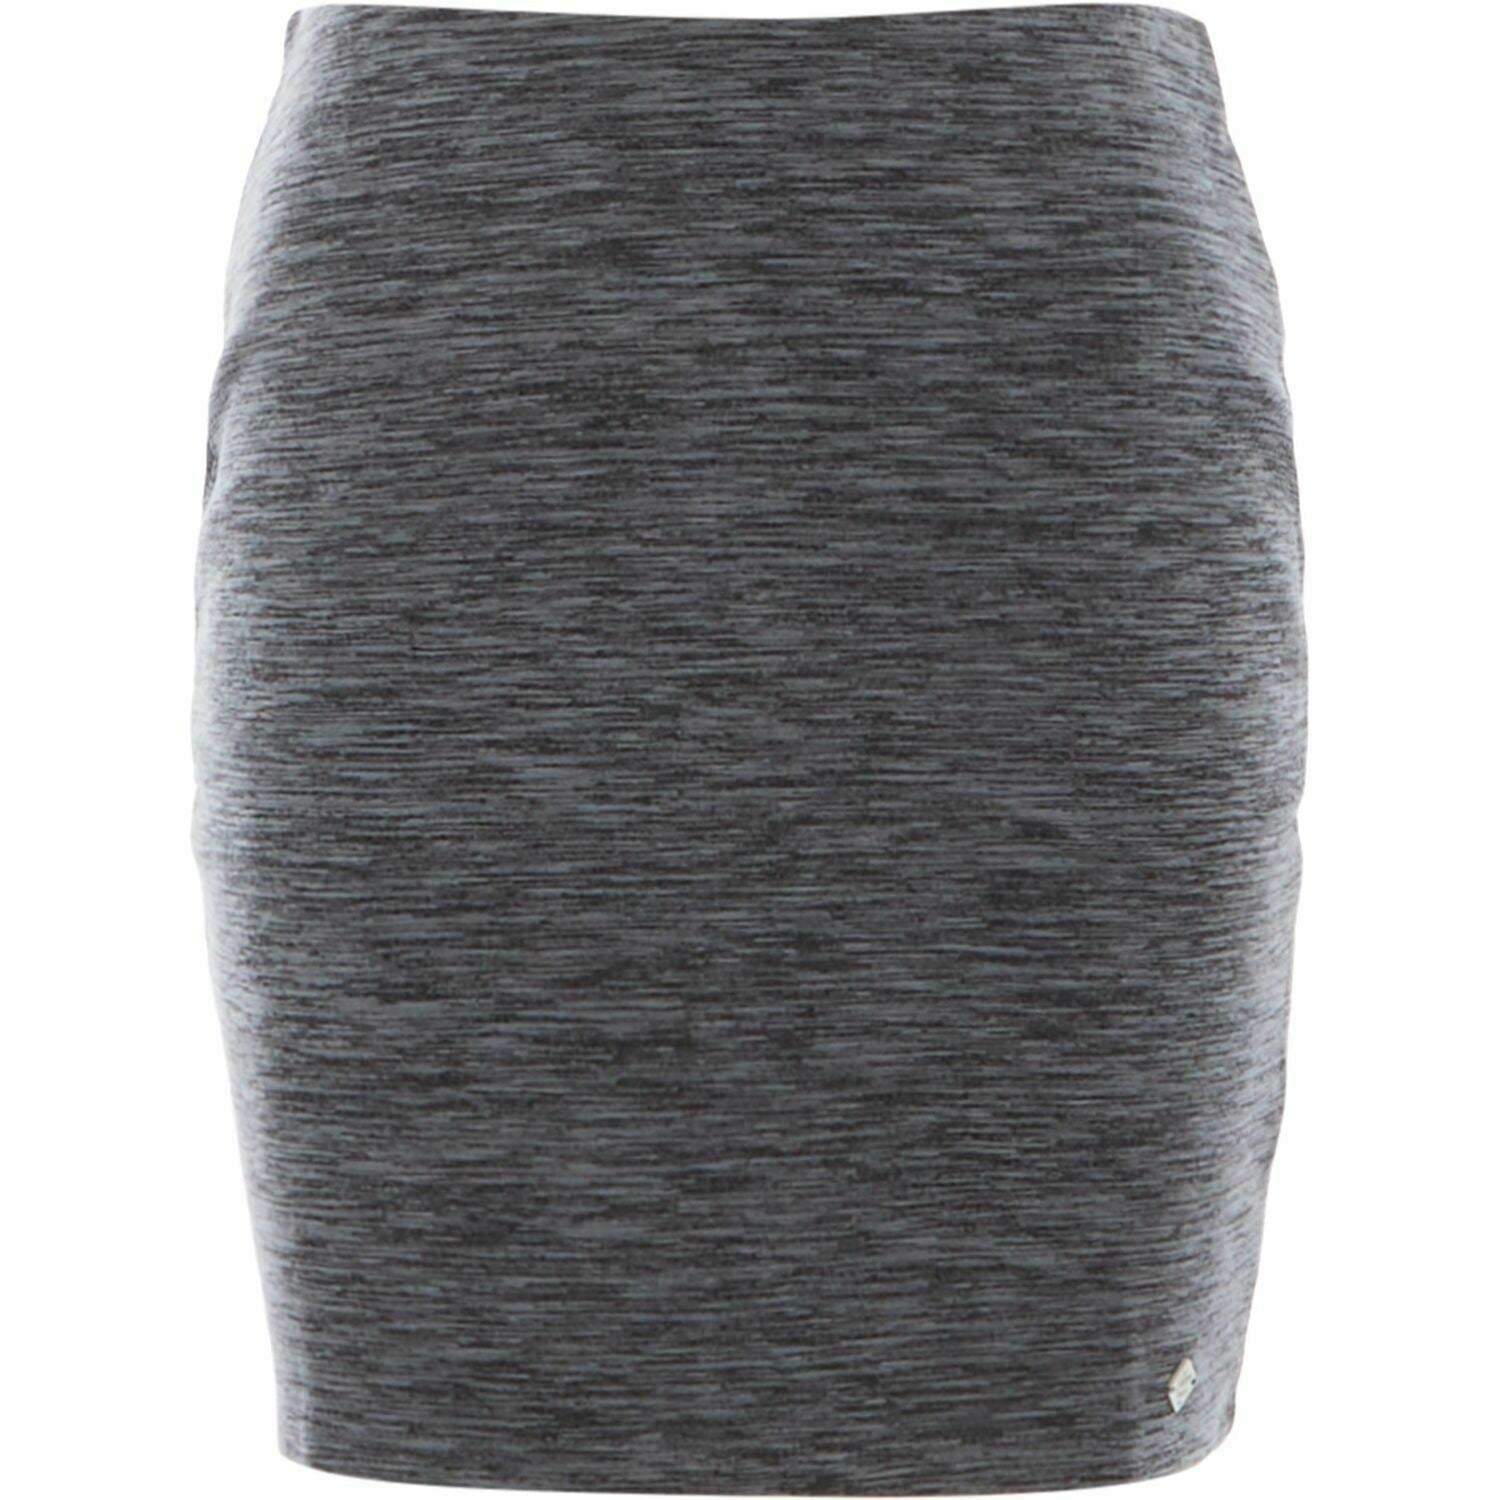 SUPERDRY Women's EDISON Mini Skirt, Charcoal Twist, size M / UK 12